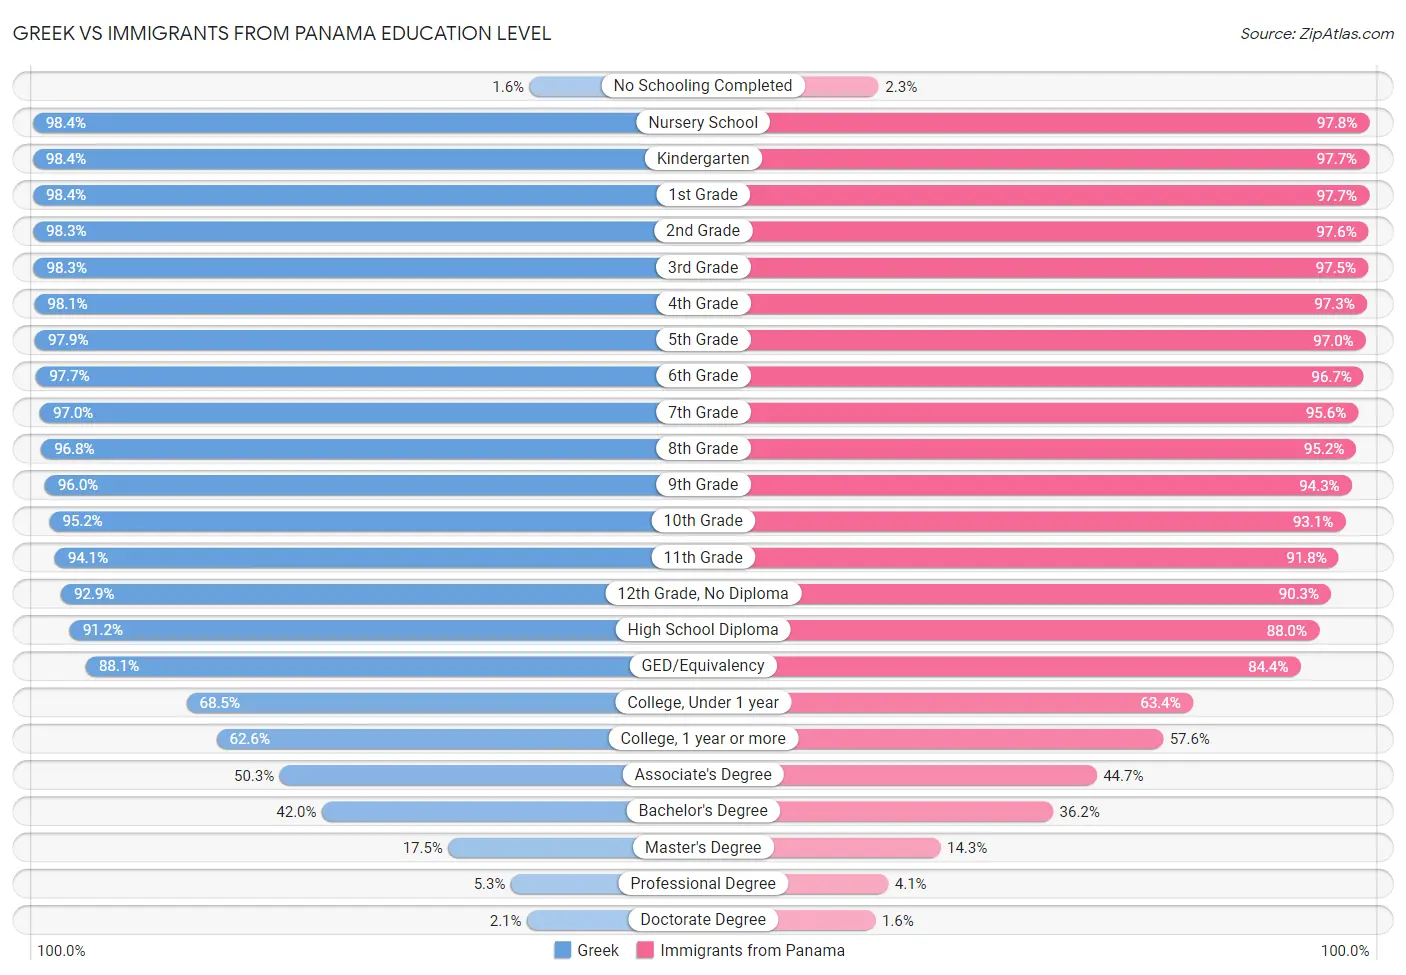 Greek vs Immigrants from Panama Education Level